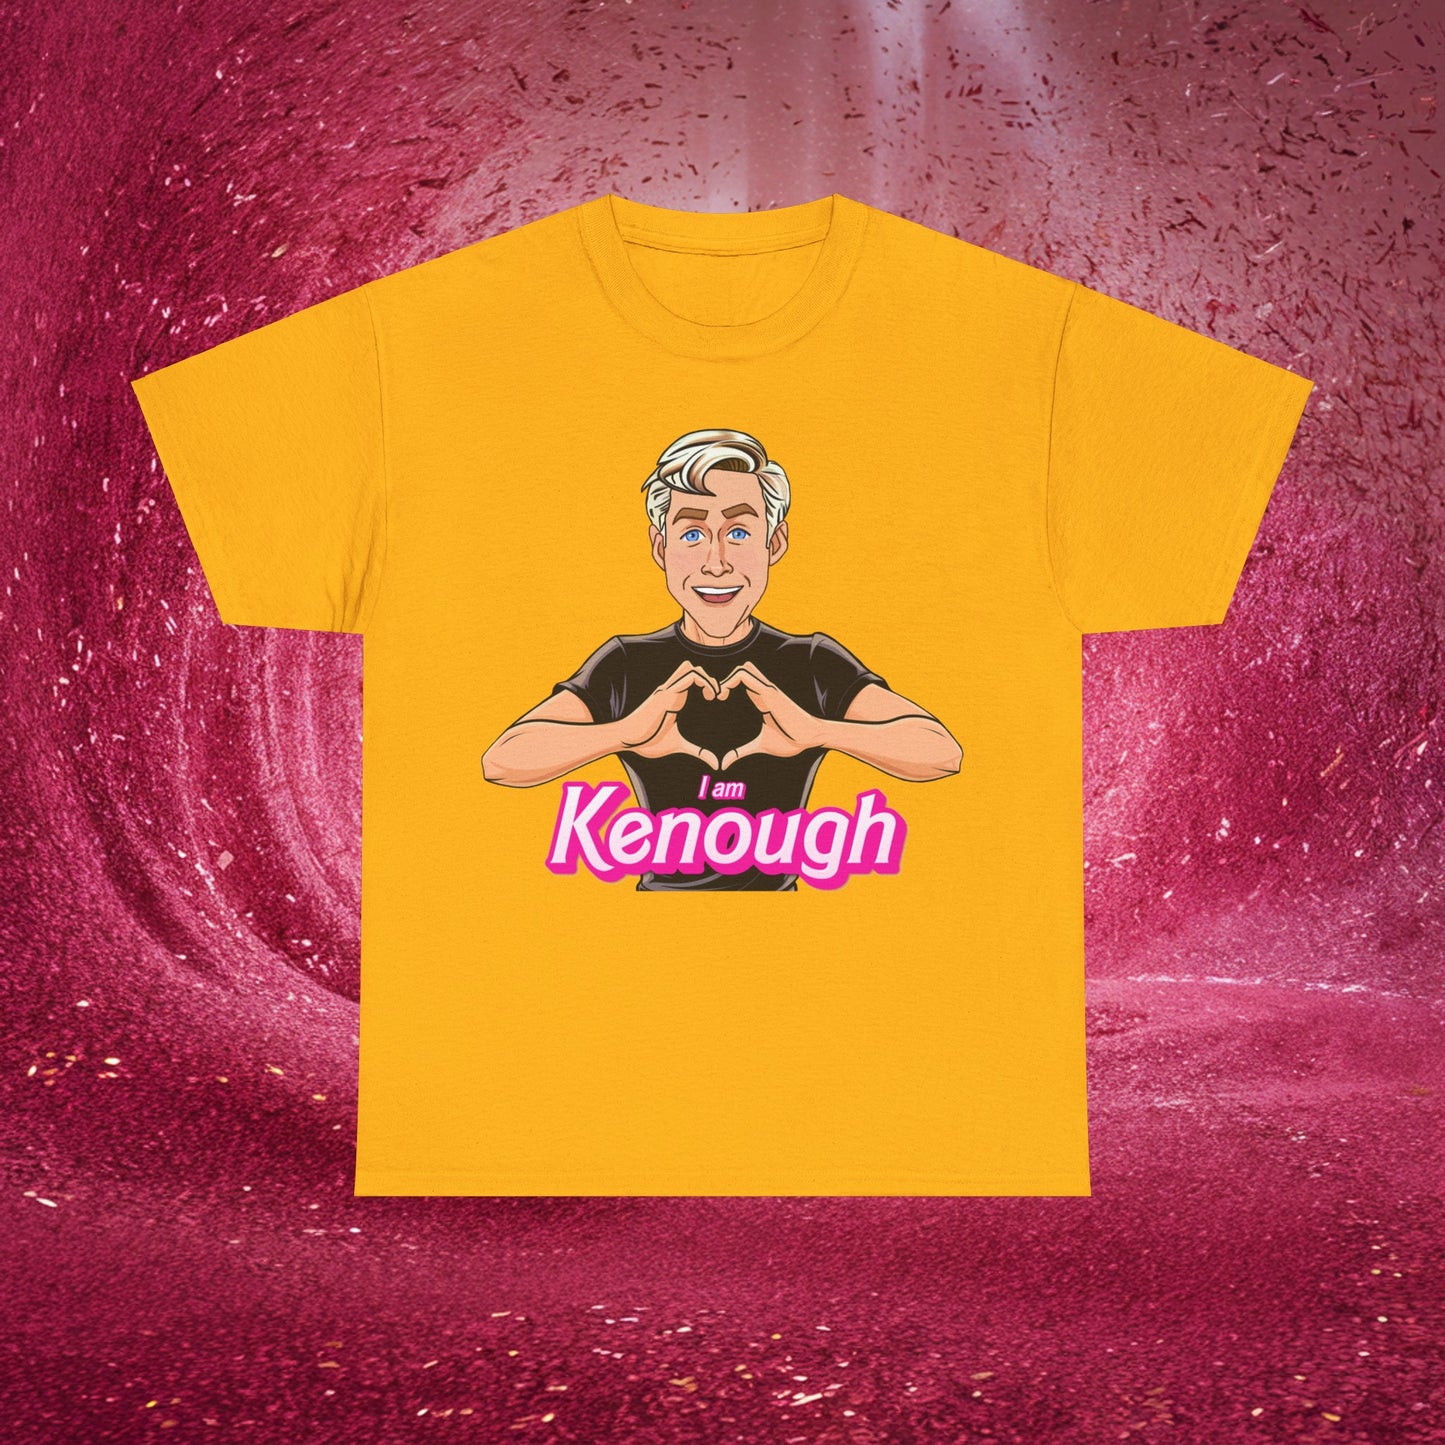 I am Kenough Tshirt Ken T-shirt Ryan Gosling Shirt Barbie T shirt Ken Gift Barbie Gift I'm Kenough Shirt I am Enough T-shirt Im Kenough Tee Next Cult Brand